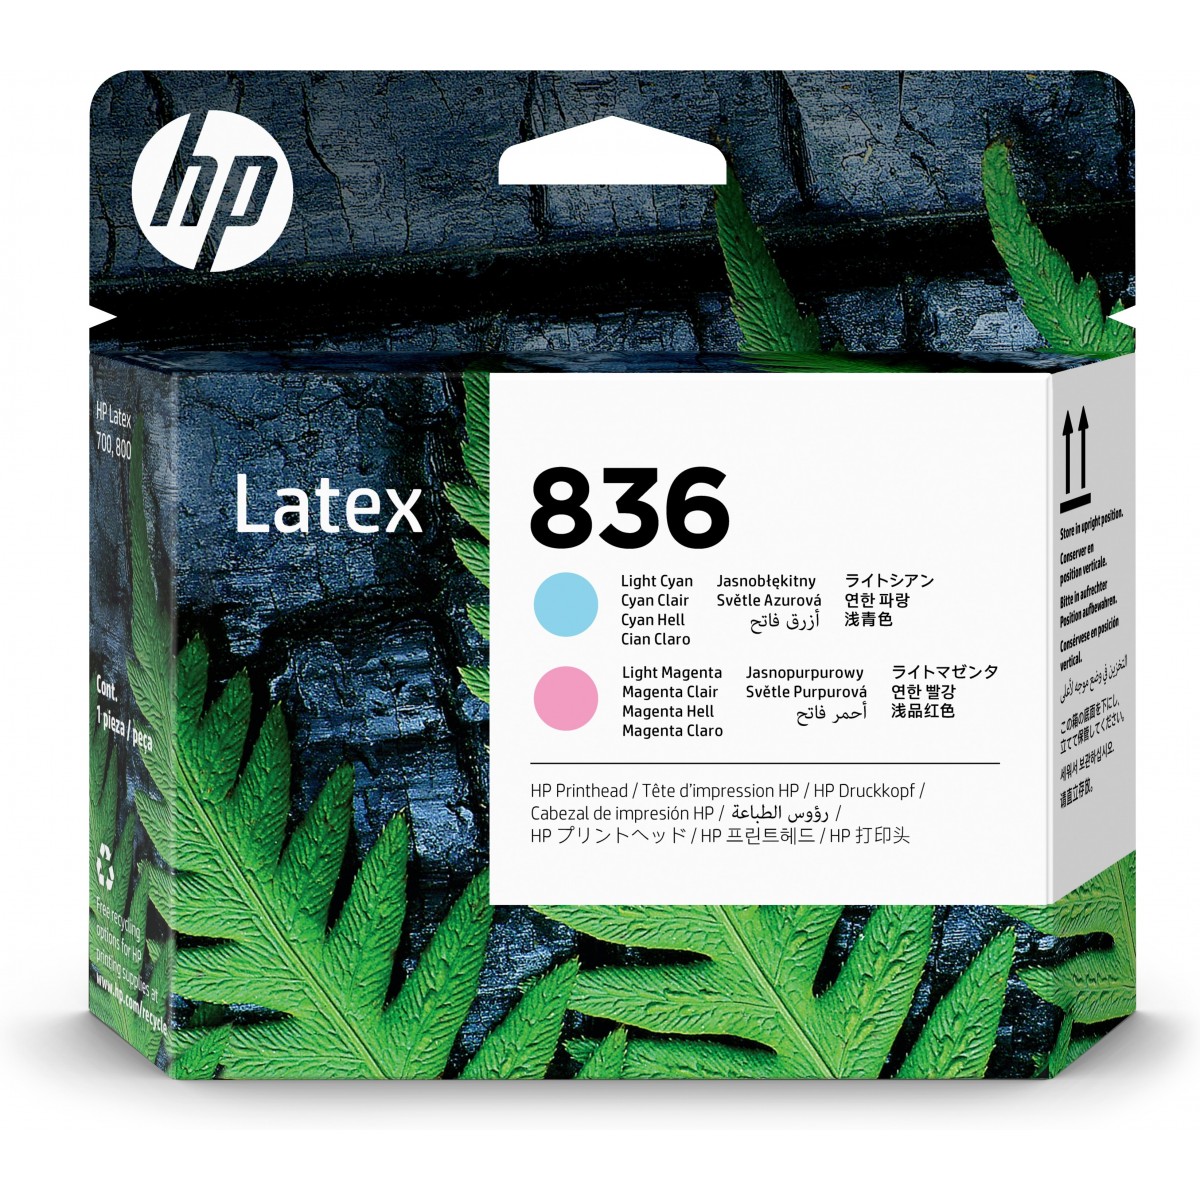 HP 836 - HP Latex 700 - 700 W - 800 - 800 W Printers - Thermal inkjet - Light Cyan - Light magenta - 4UV97A - Box - 1 pc(s)